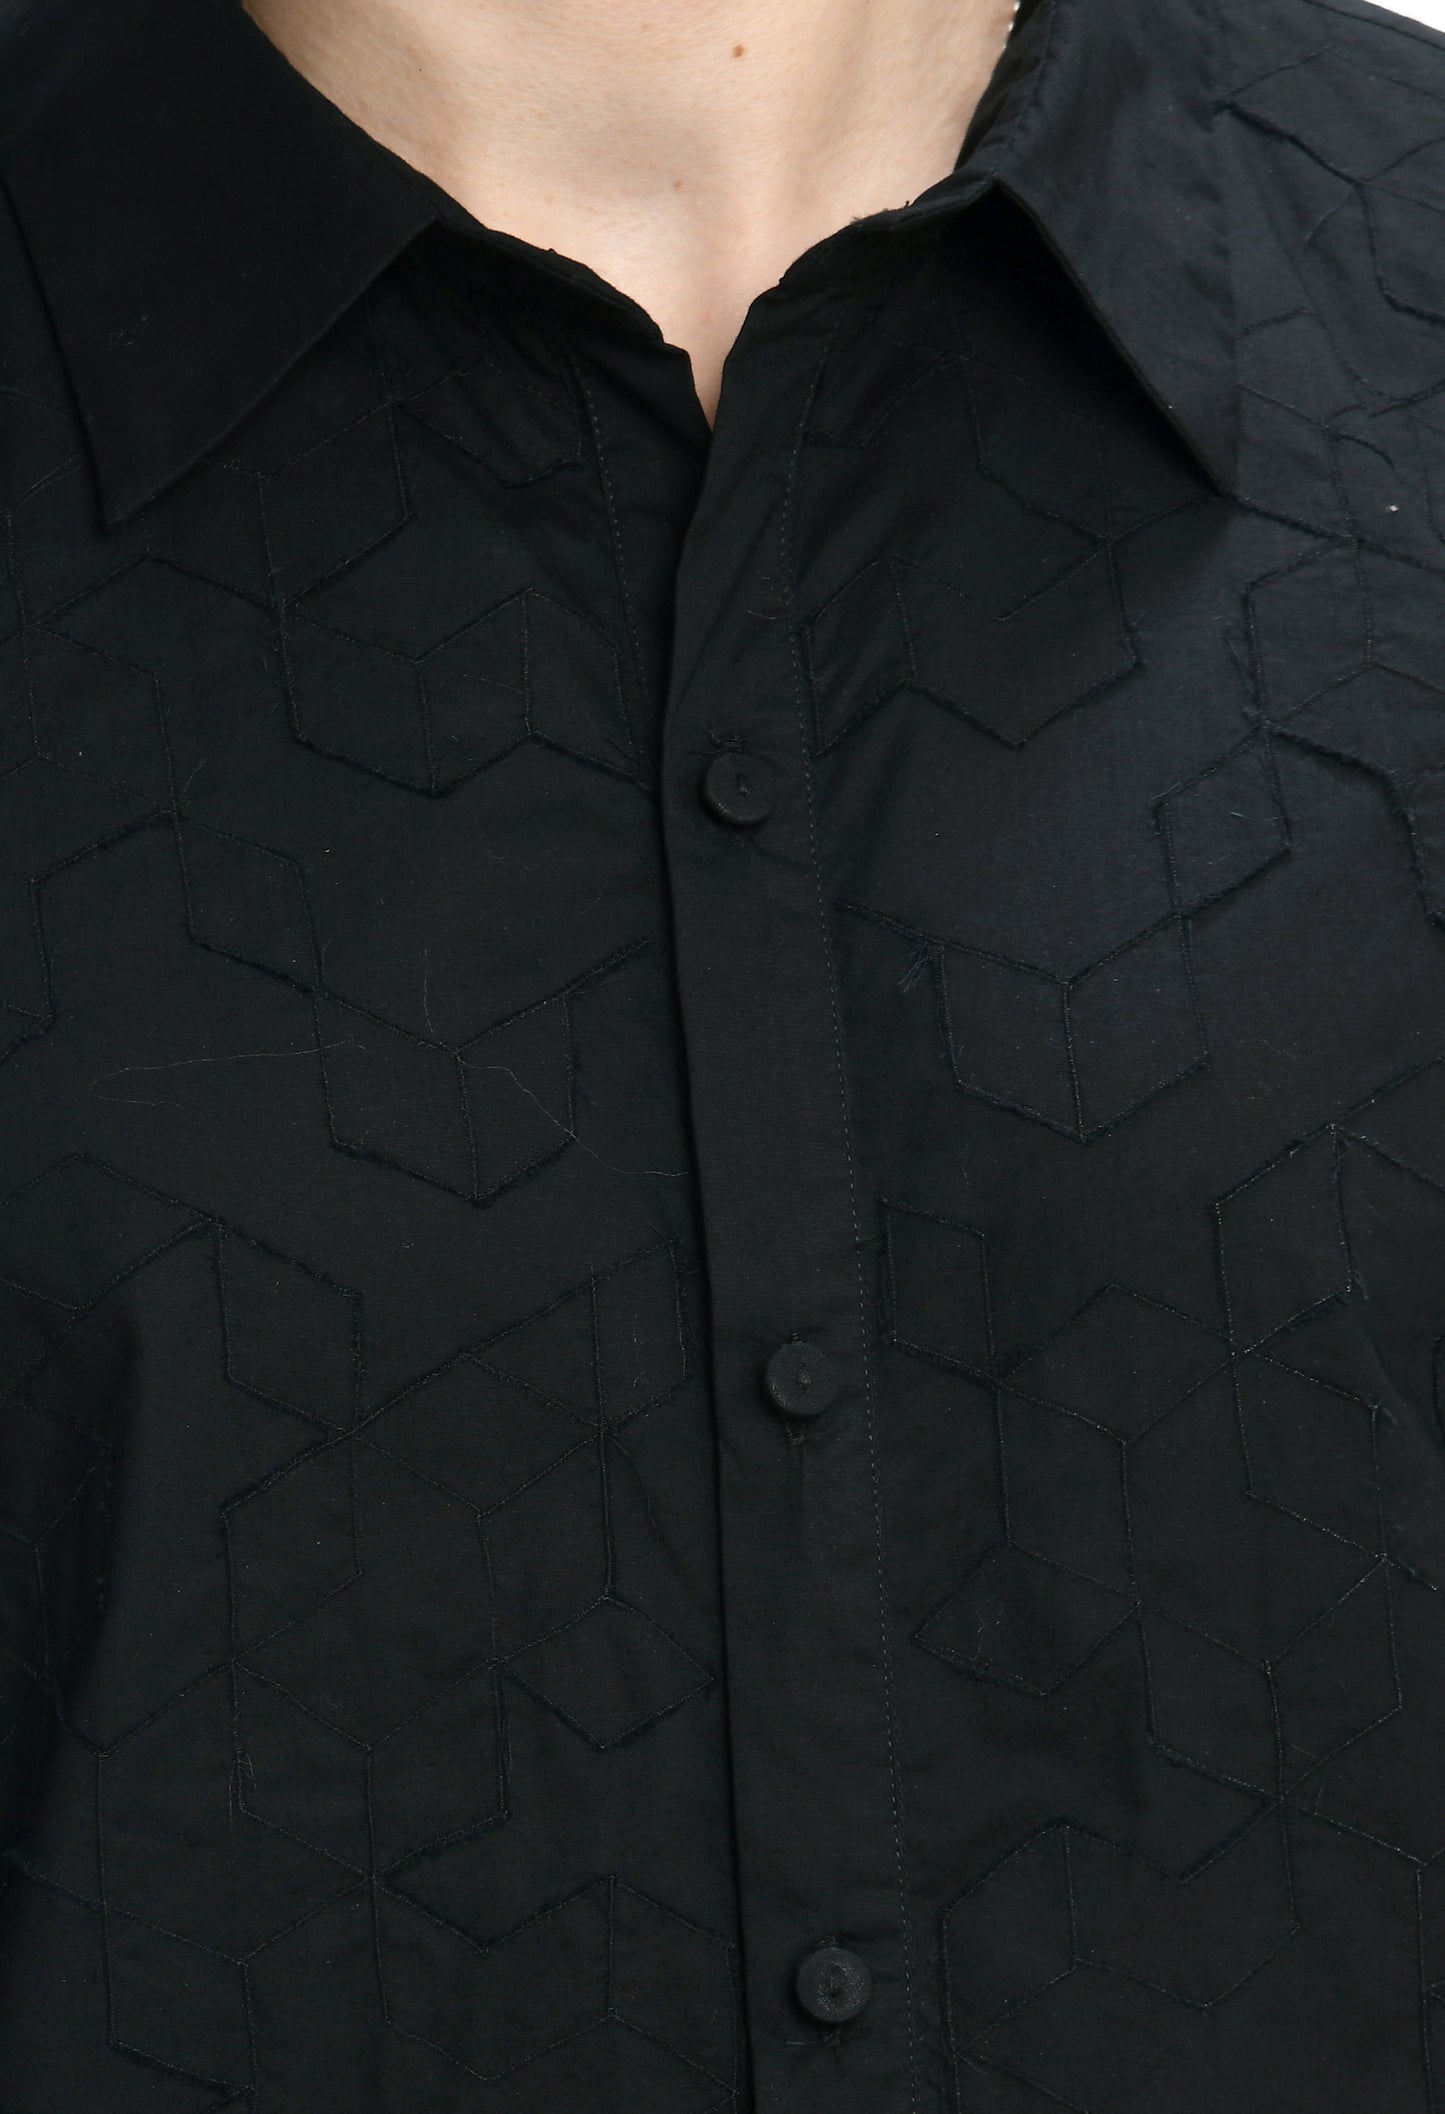 A black cotton shirt showcasing tone on tone appliqué work.